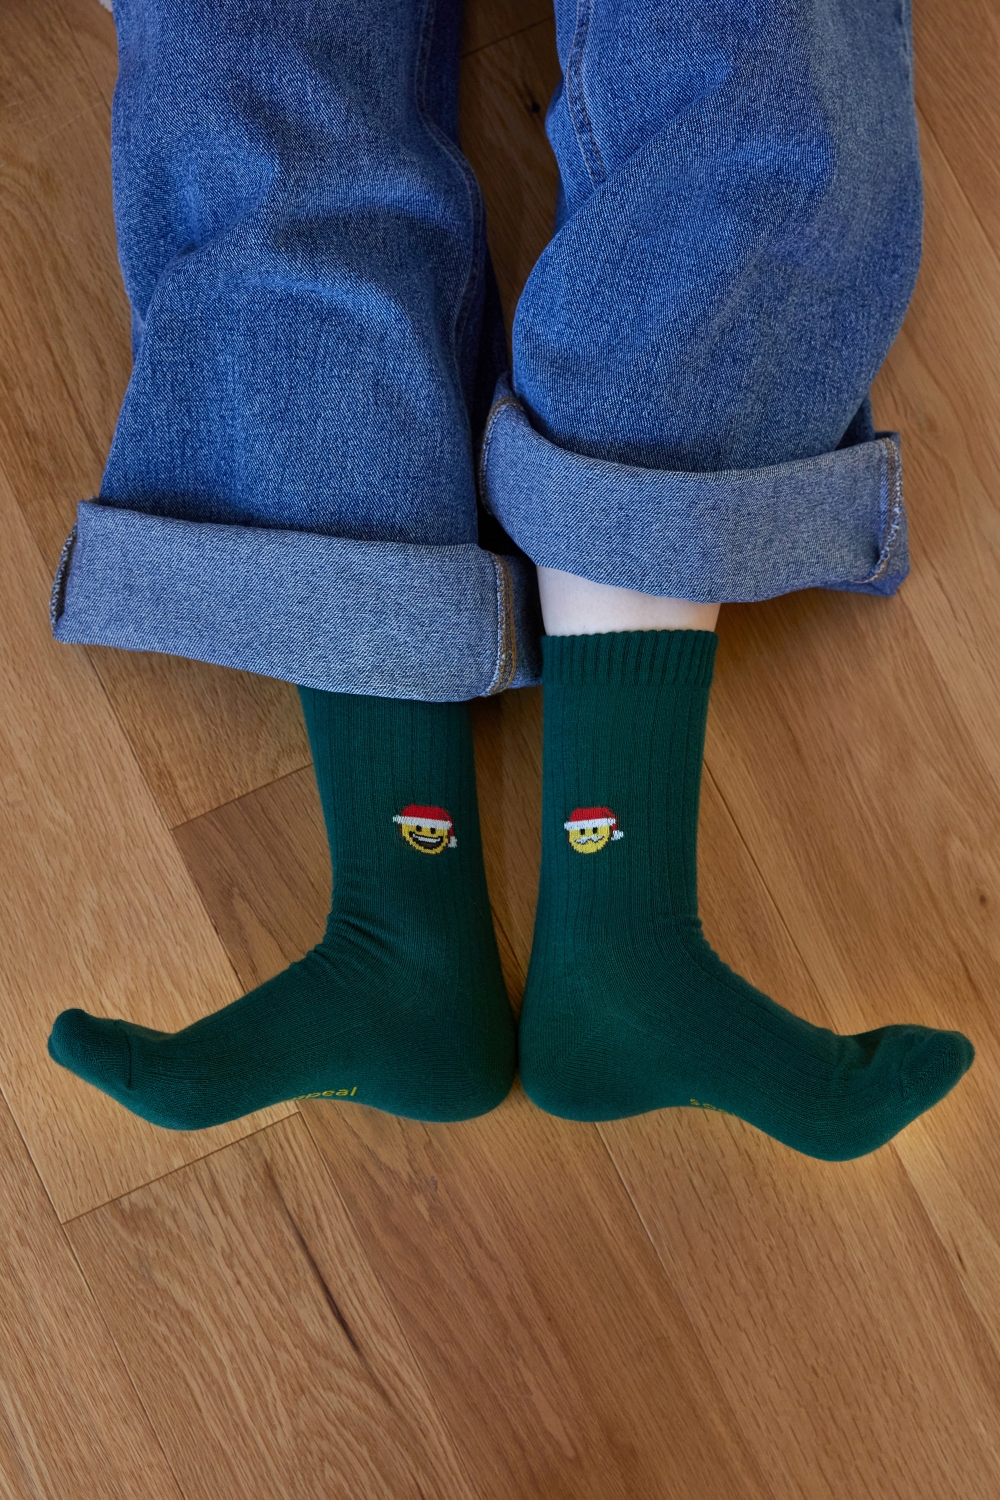 socks detail image-S1L5